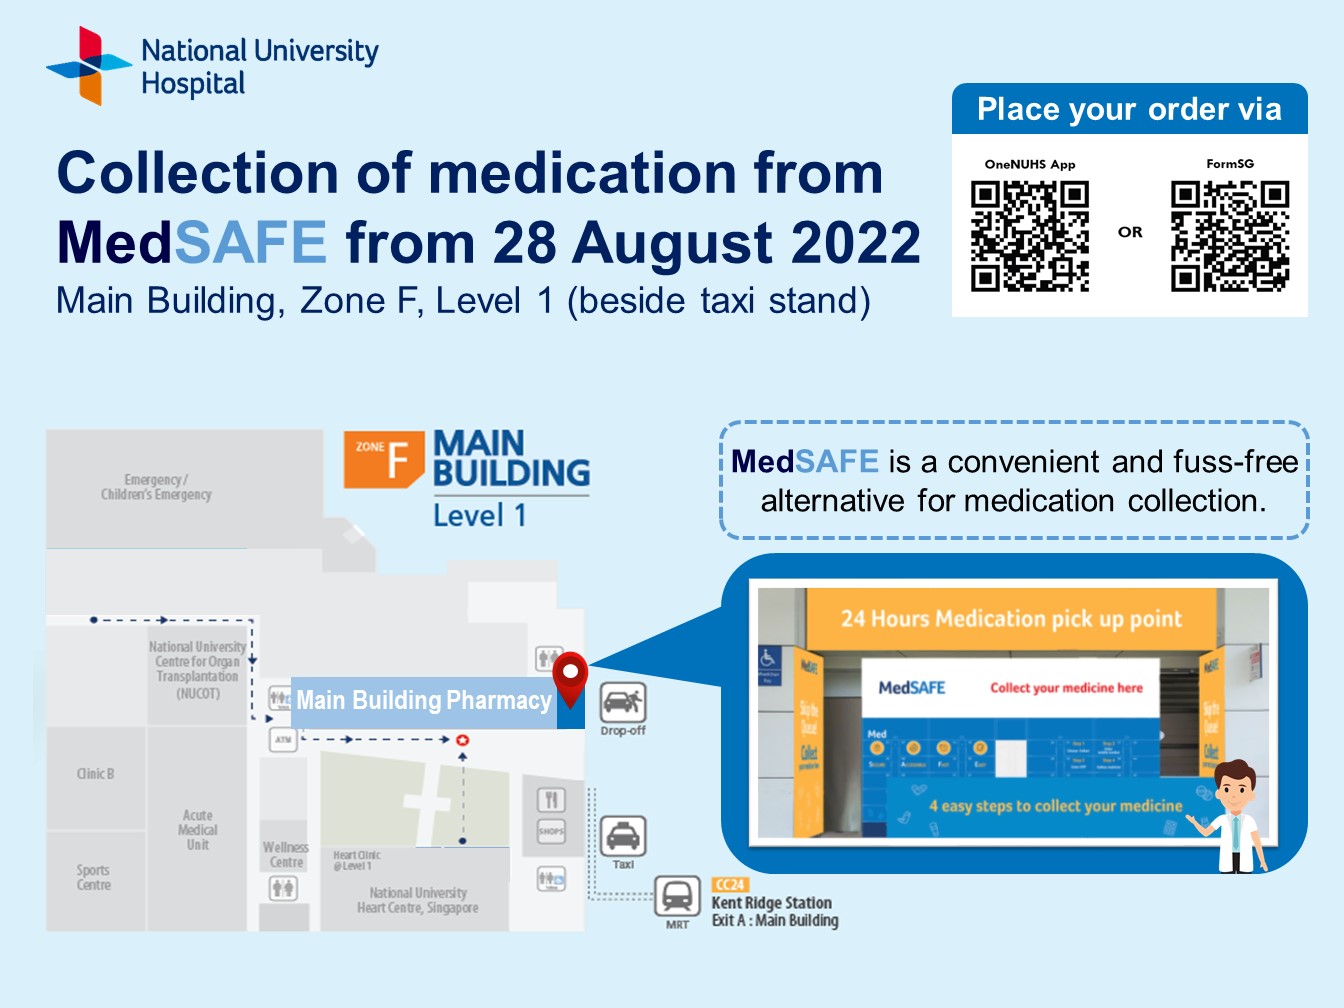 Medication Collection through MedSAFE